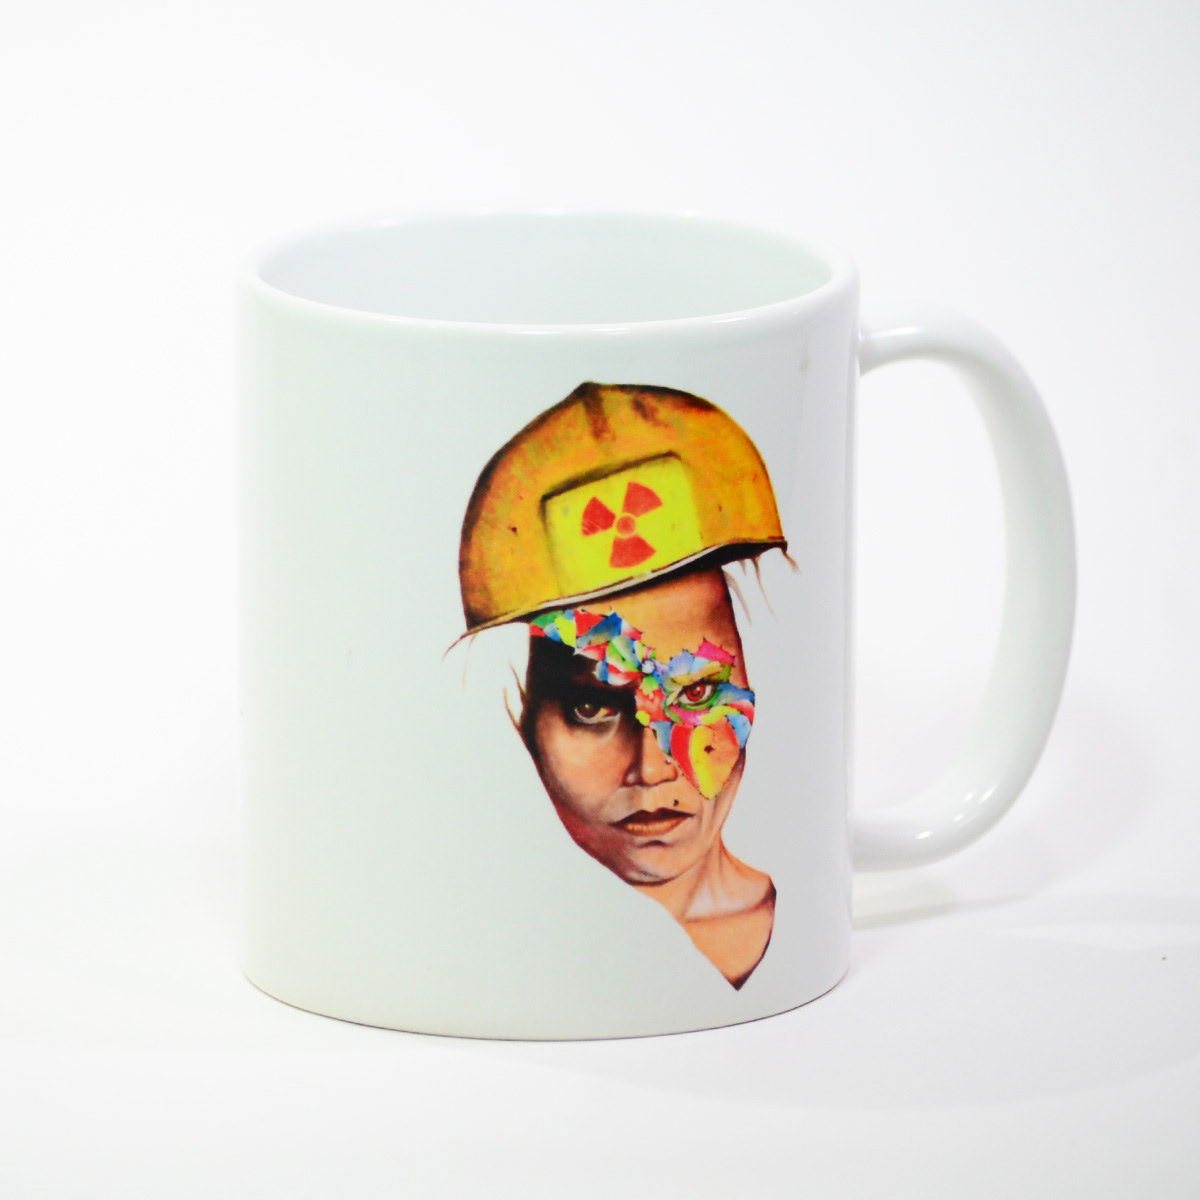 acrylic art design ceramic Mugs psy SAMEER hazari